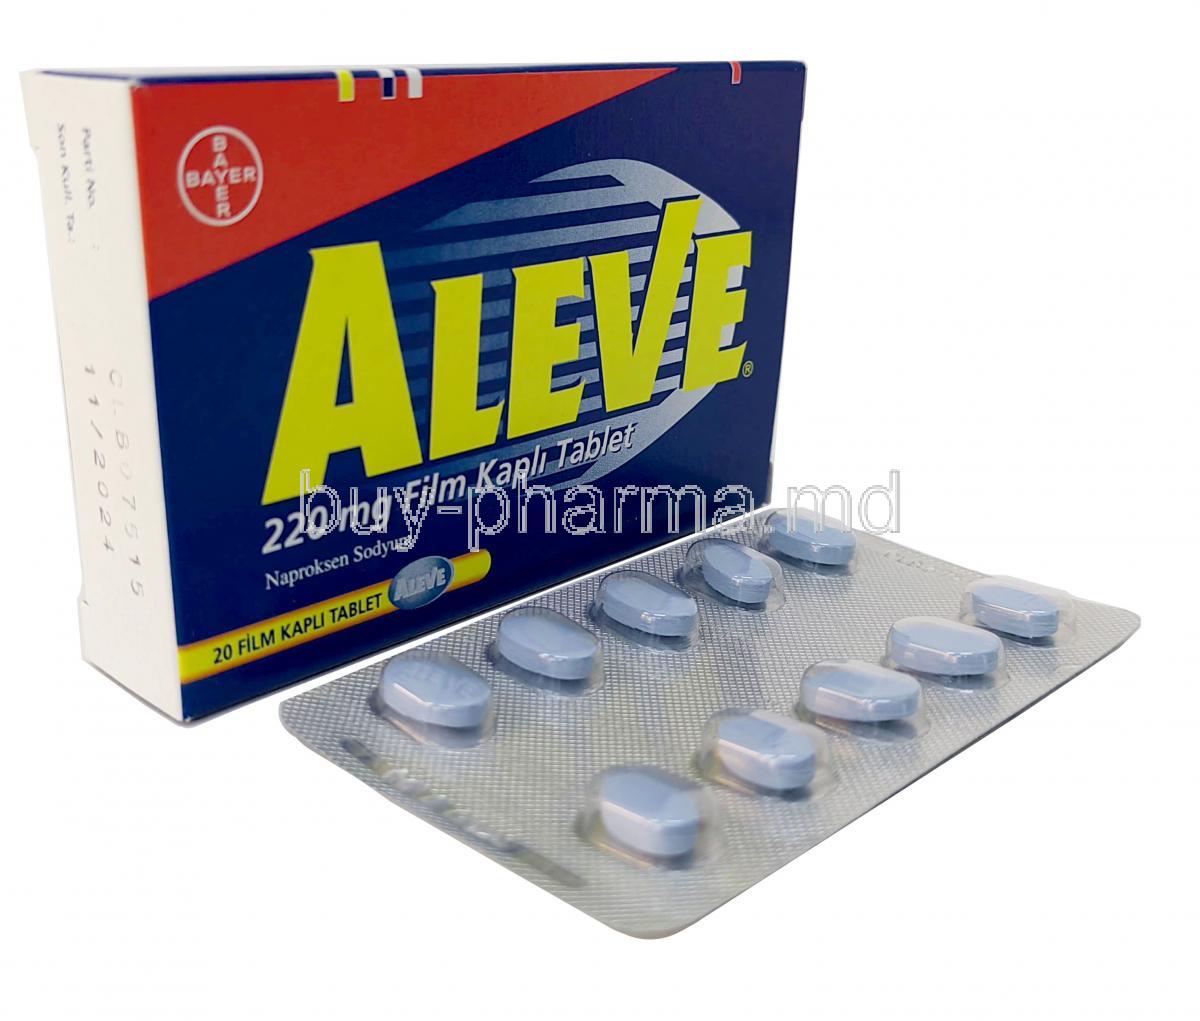 Aleve, Naproxen 220 mg, Bayer, Box, Blisterpack